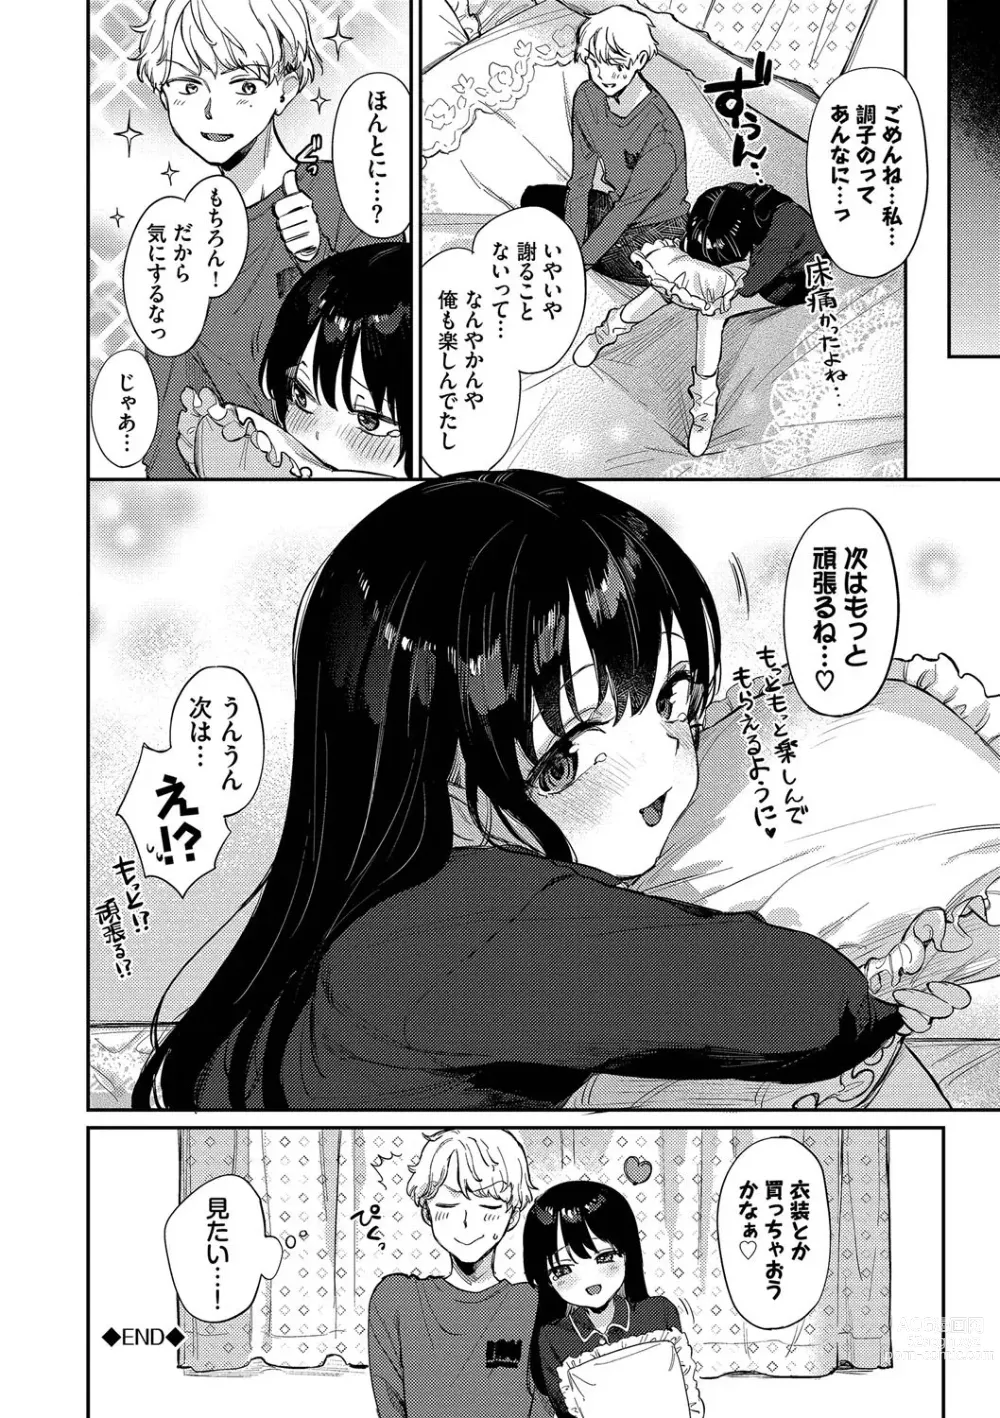 Page 27 of manga Mutsuri Bloom